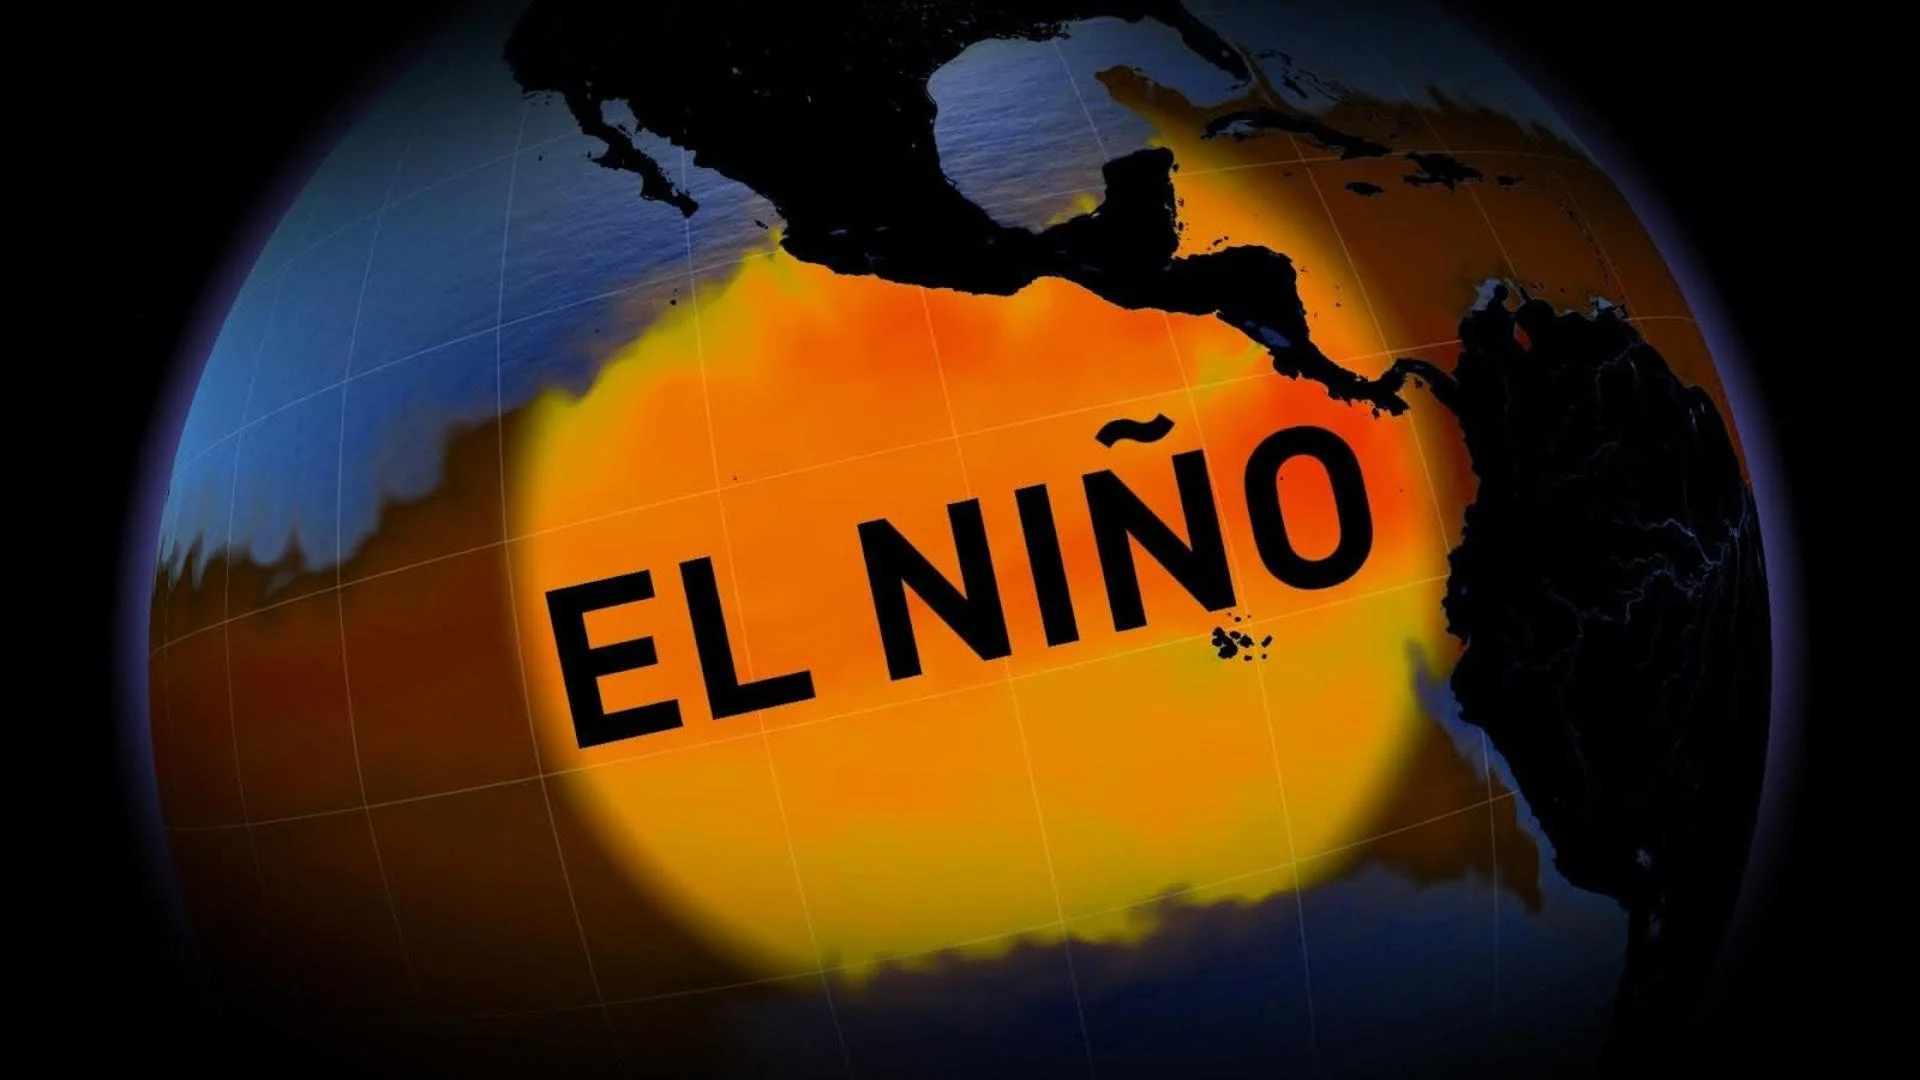 Historic El Niño has weakened, but its impacts hang on